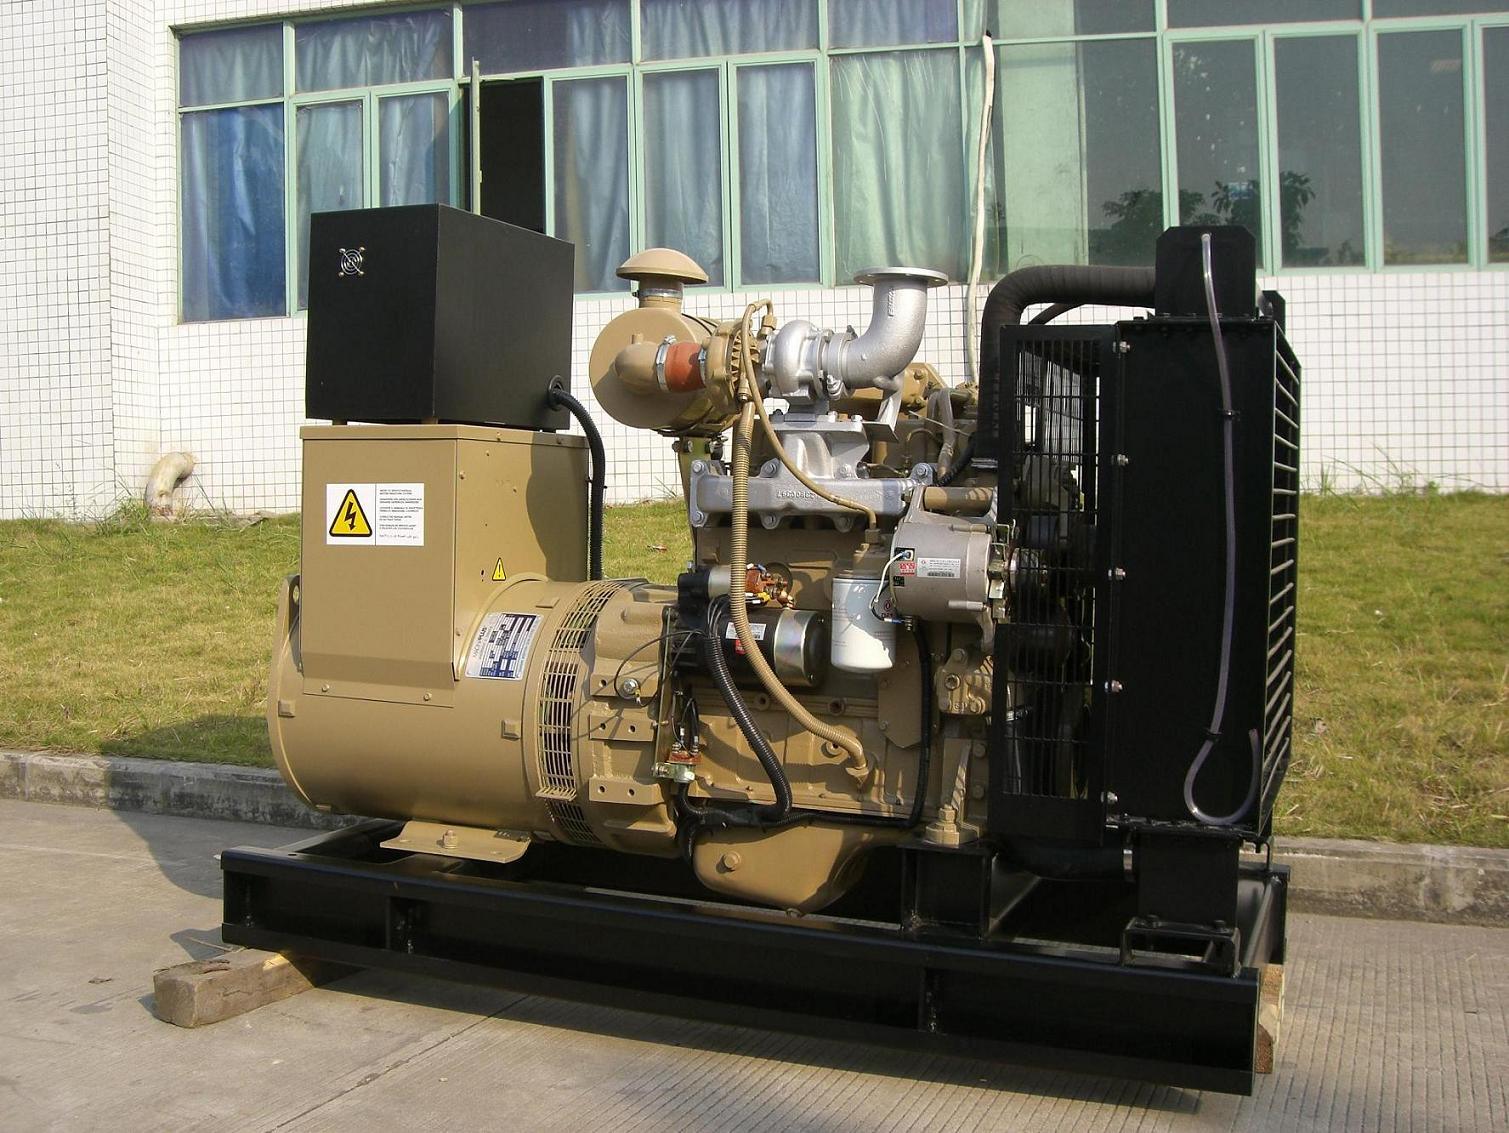 Generator Powered by Cummins Engine (FCG26)